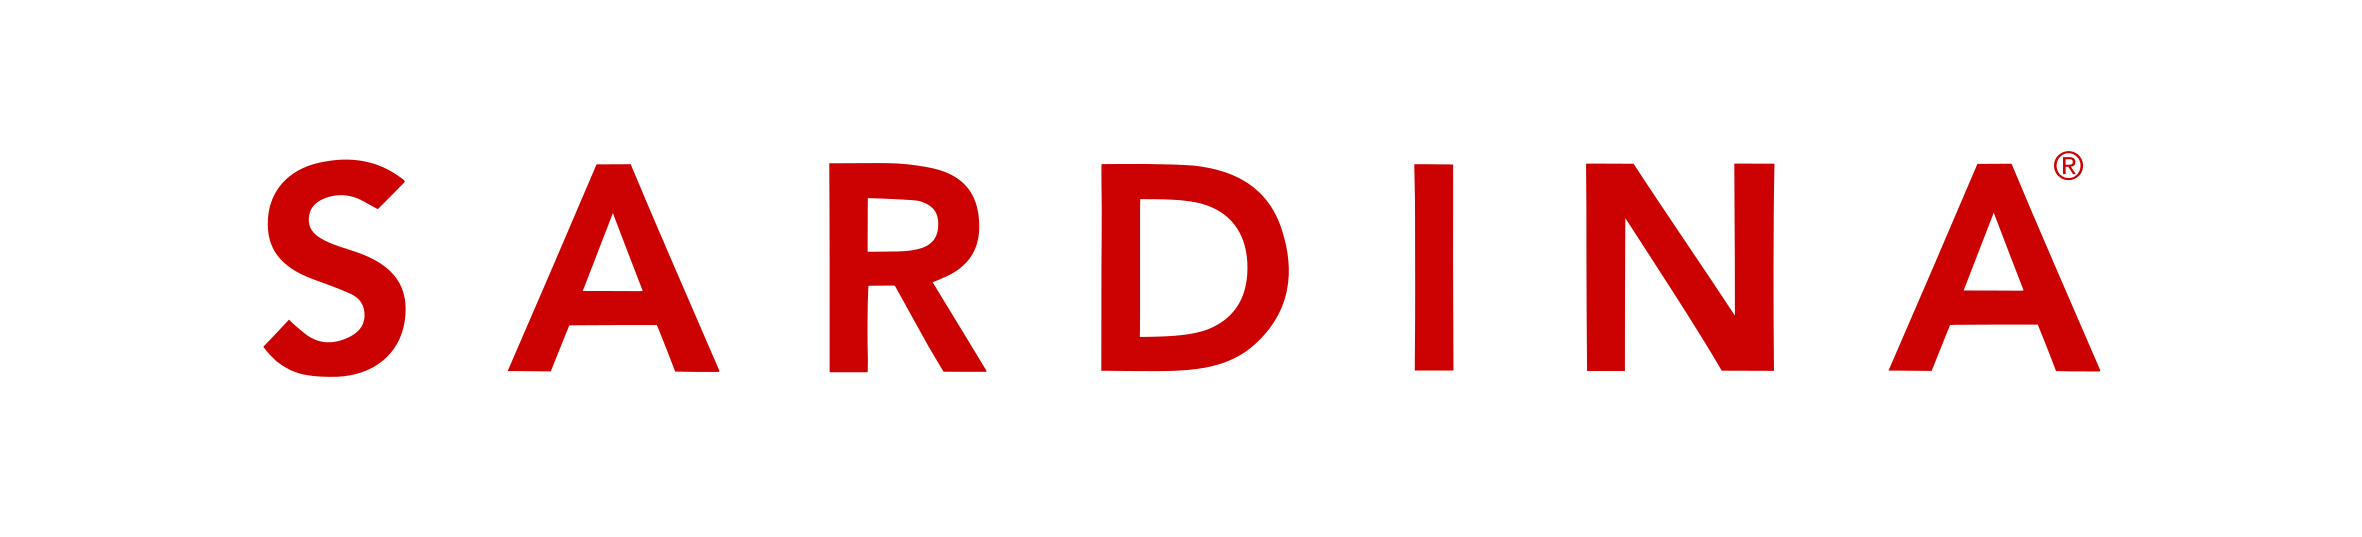 Sardina red logo no backgroud trademark